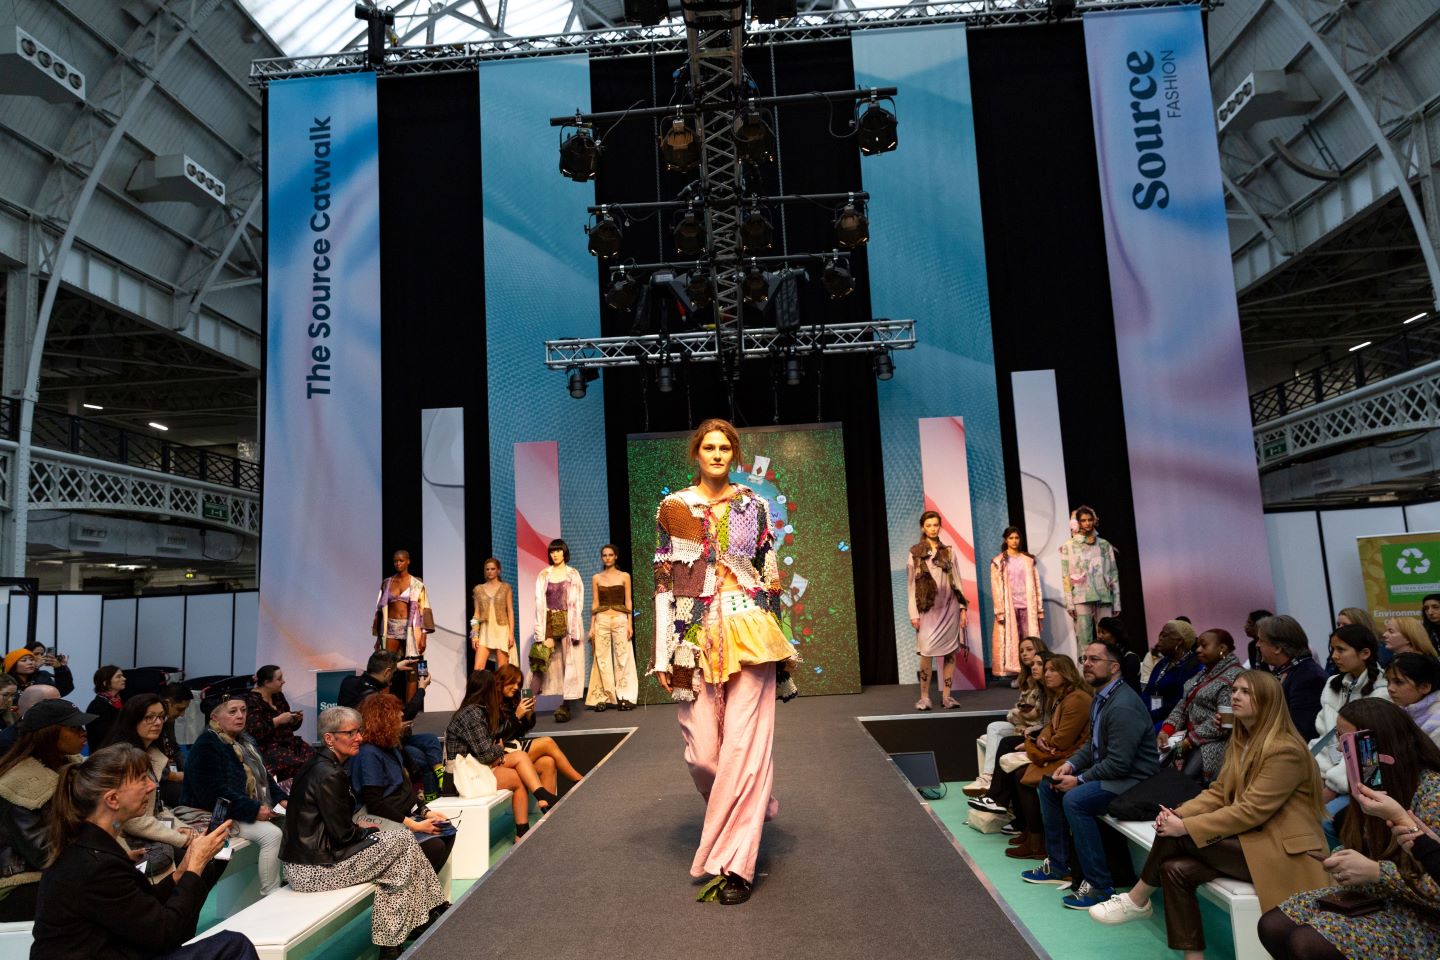 London Fashion Week trades catwalks for online innovation - Global Times